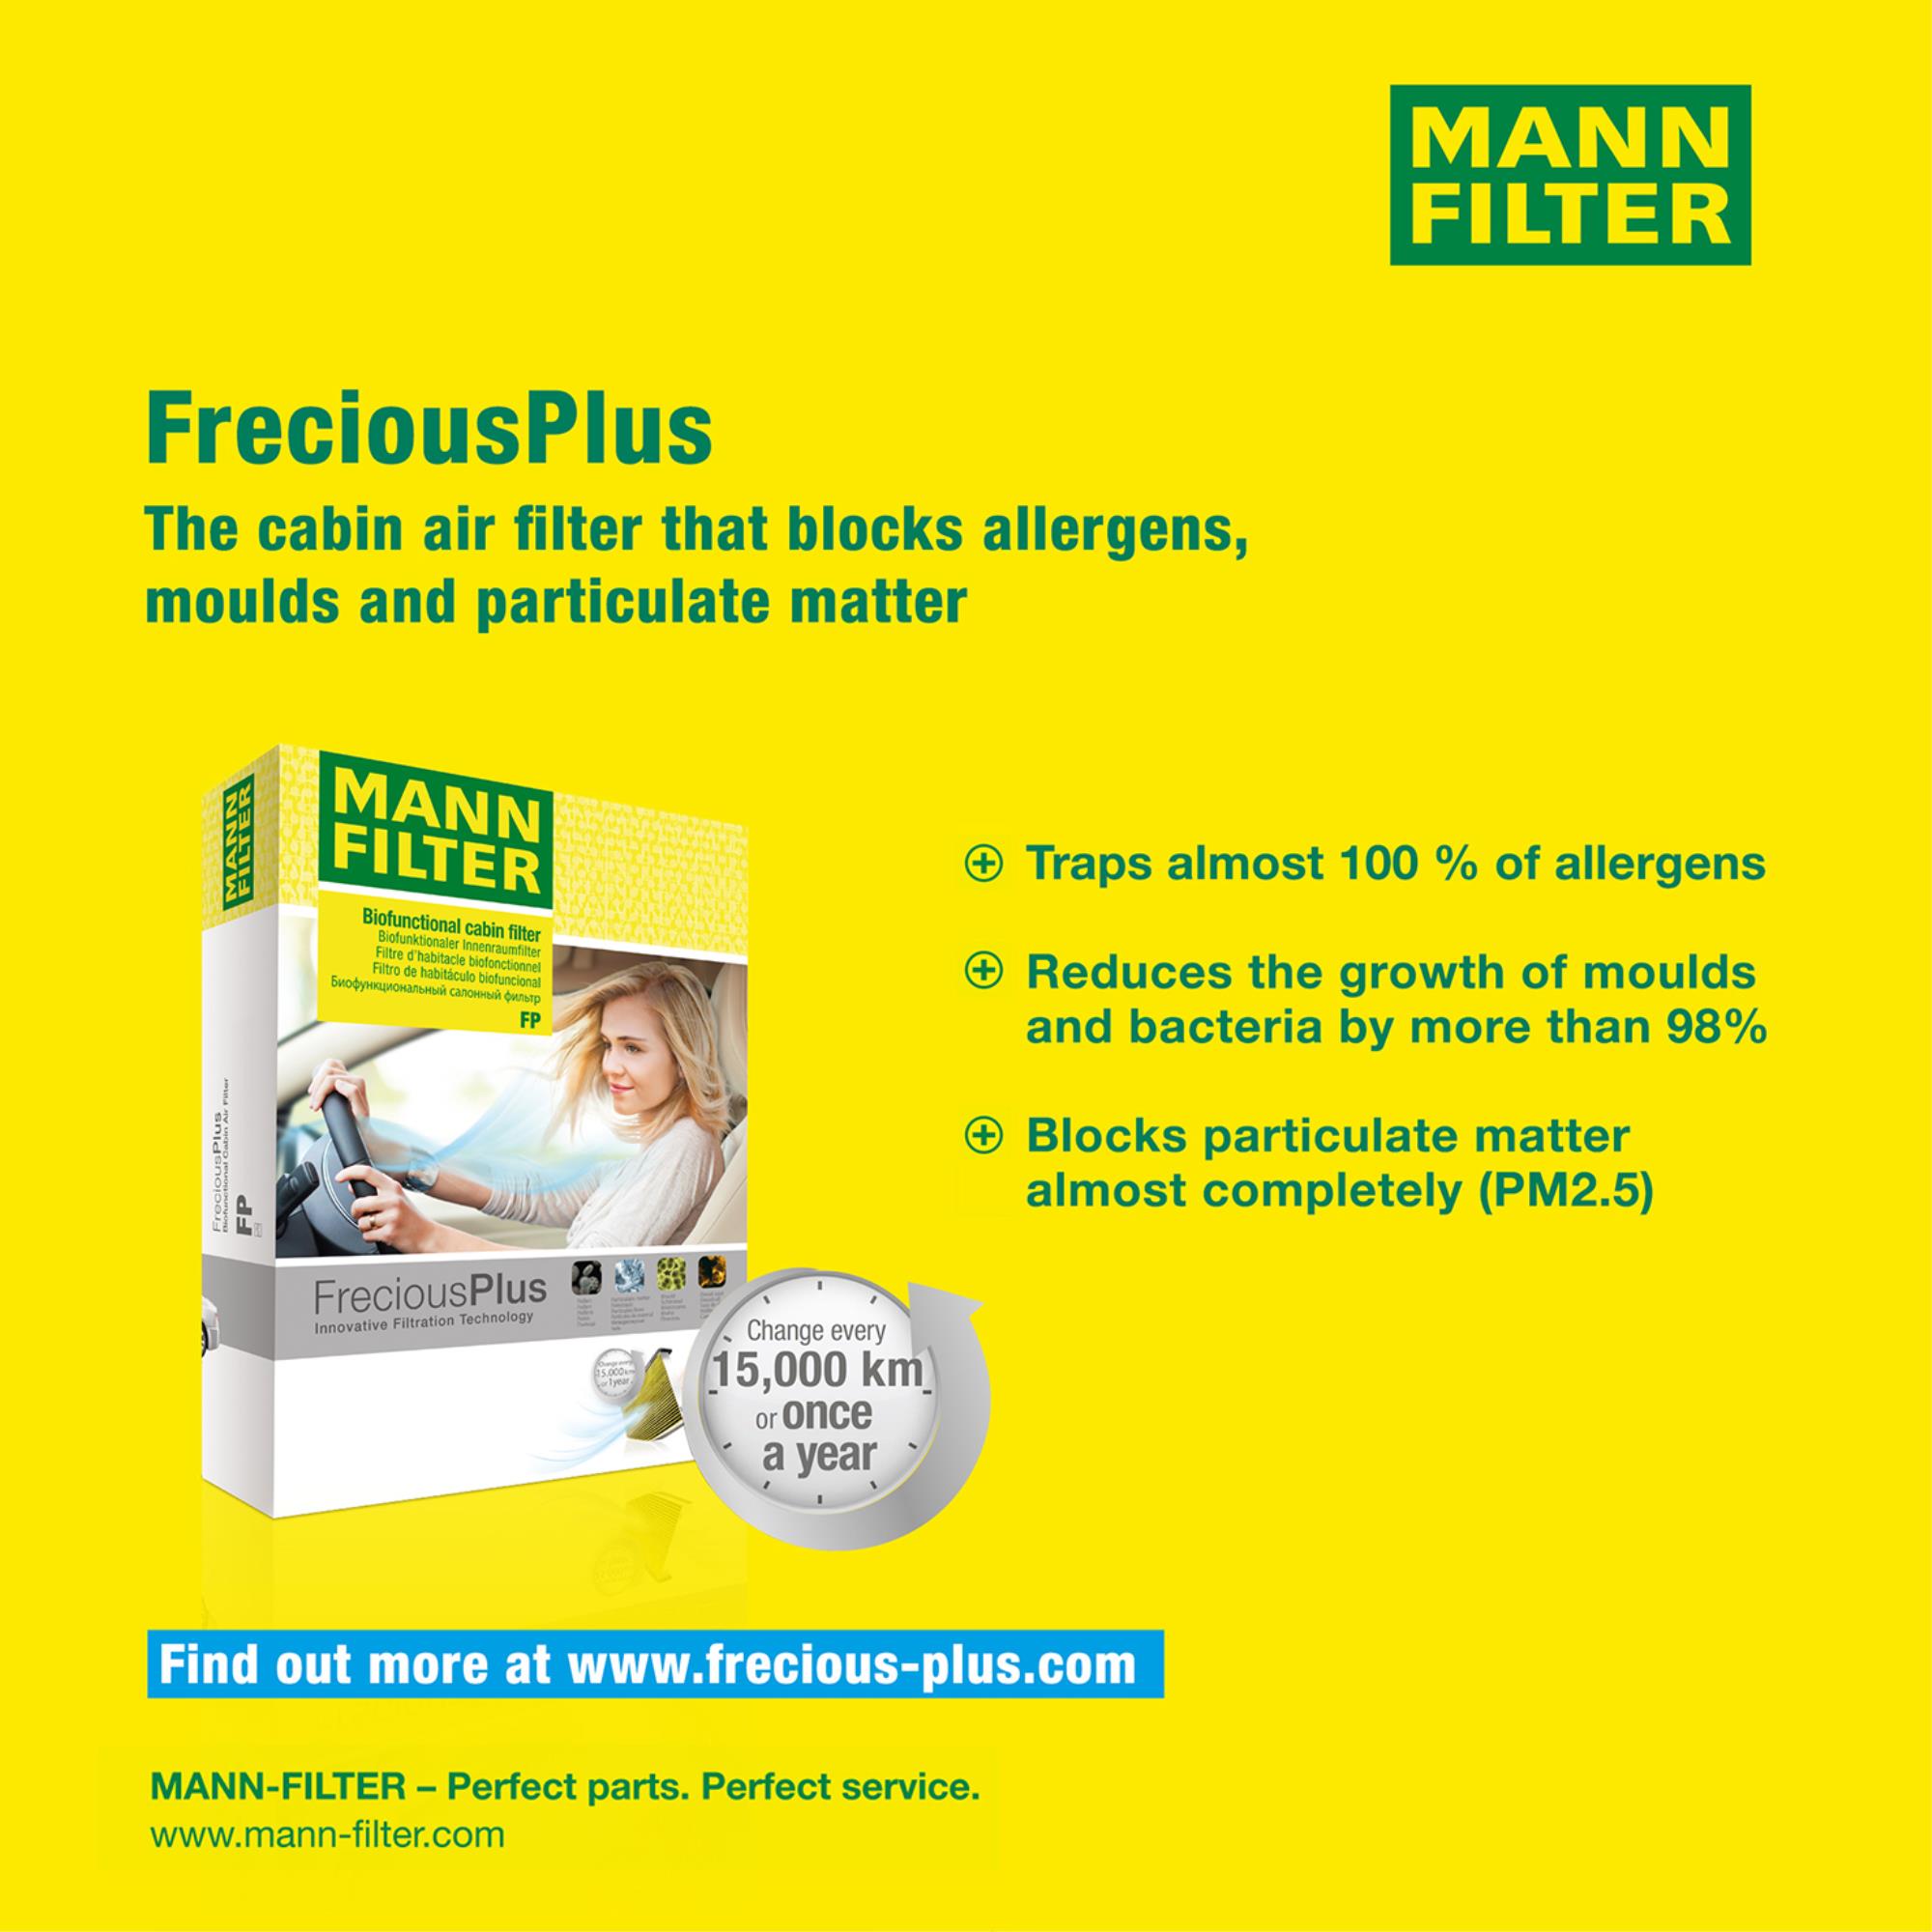 MANN-Filter Innenraumfilter Biofunctional für Allergiker FP 26 009